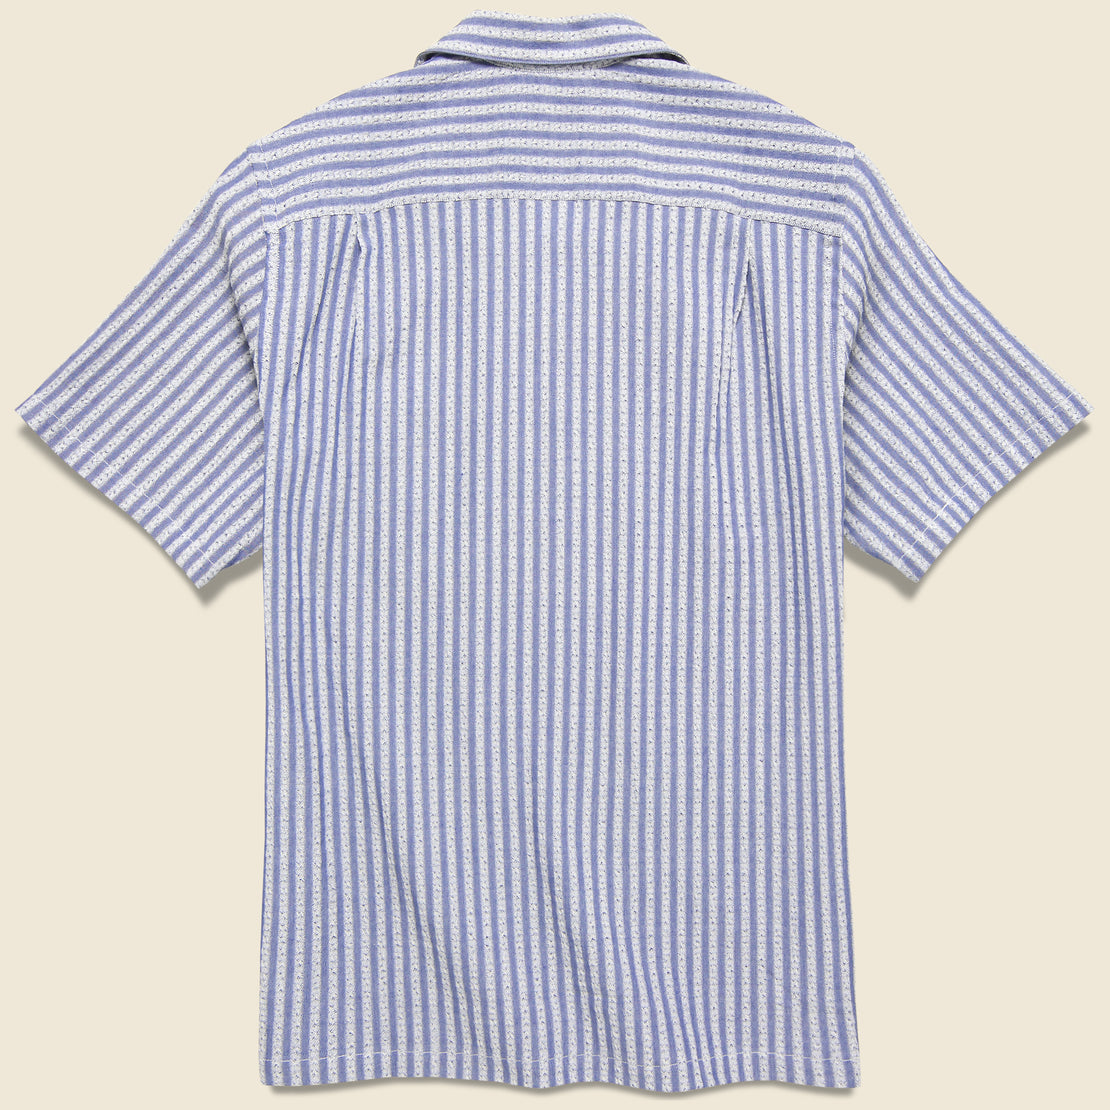 Jacquard Chambray Shirt - Indigo/Blue